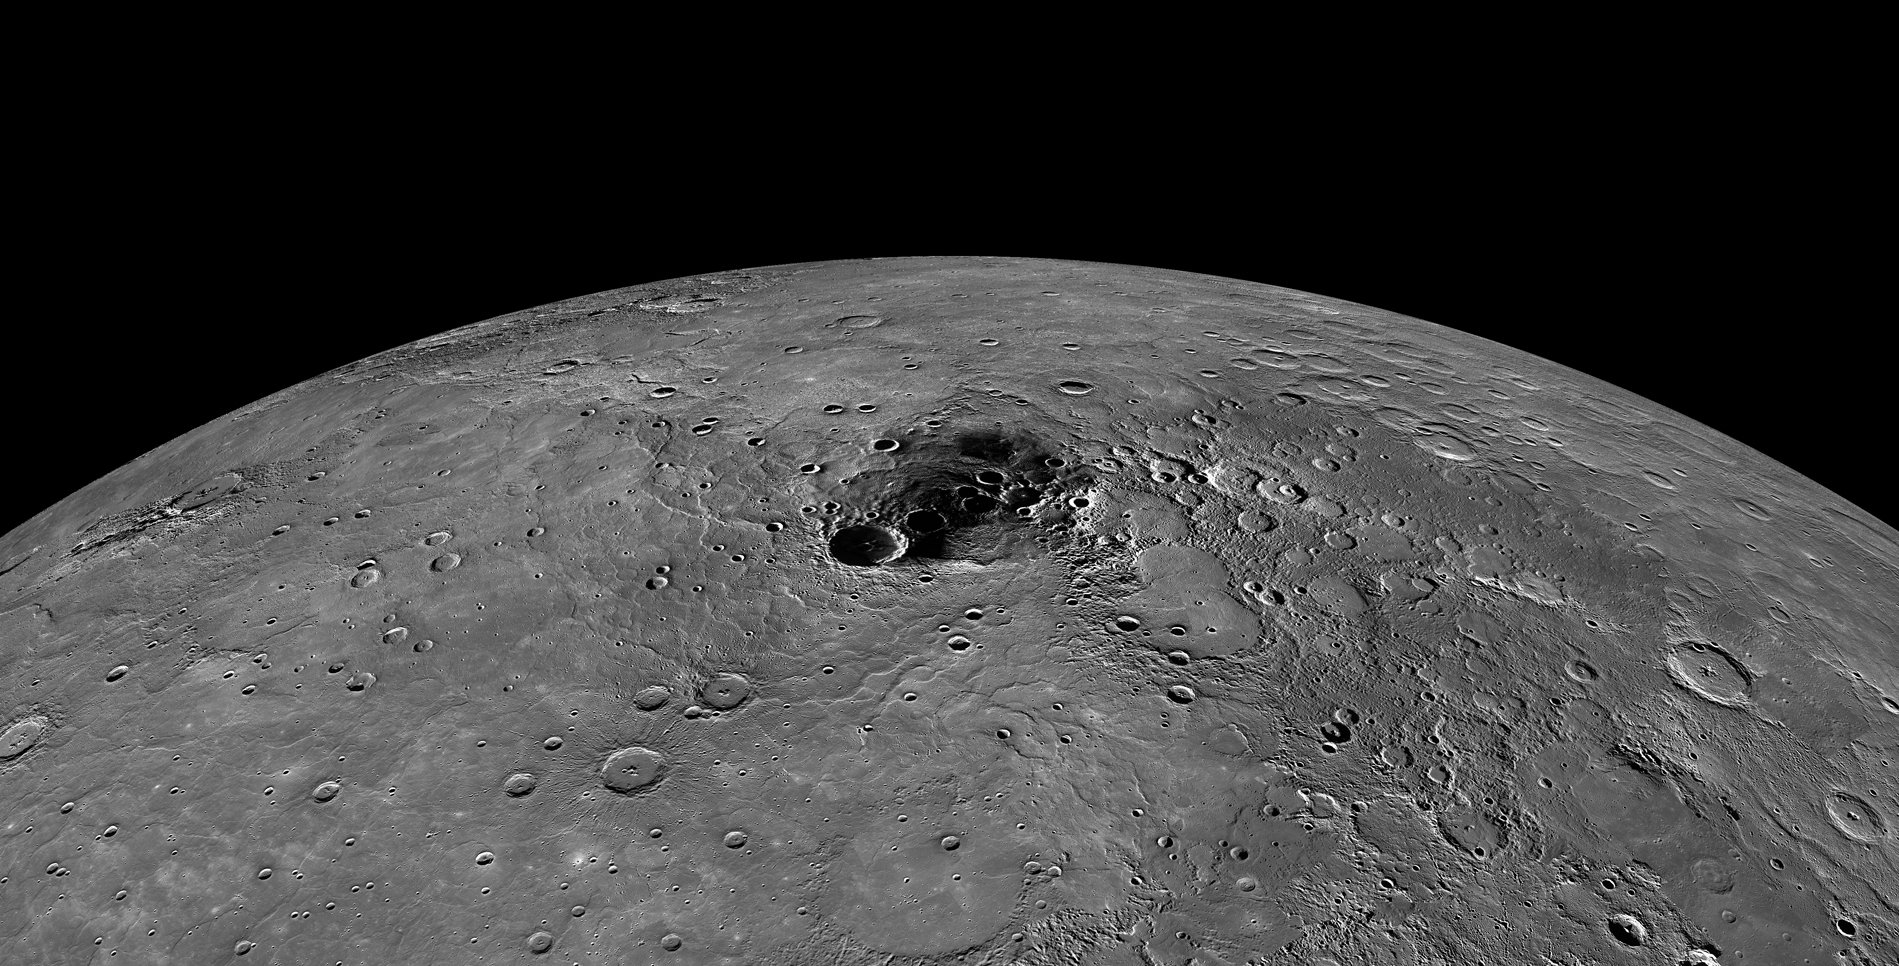 North pole of Mercury -- NASA